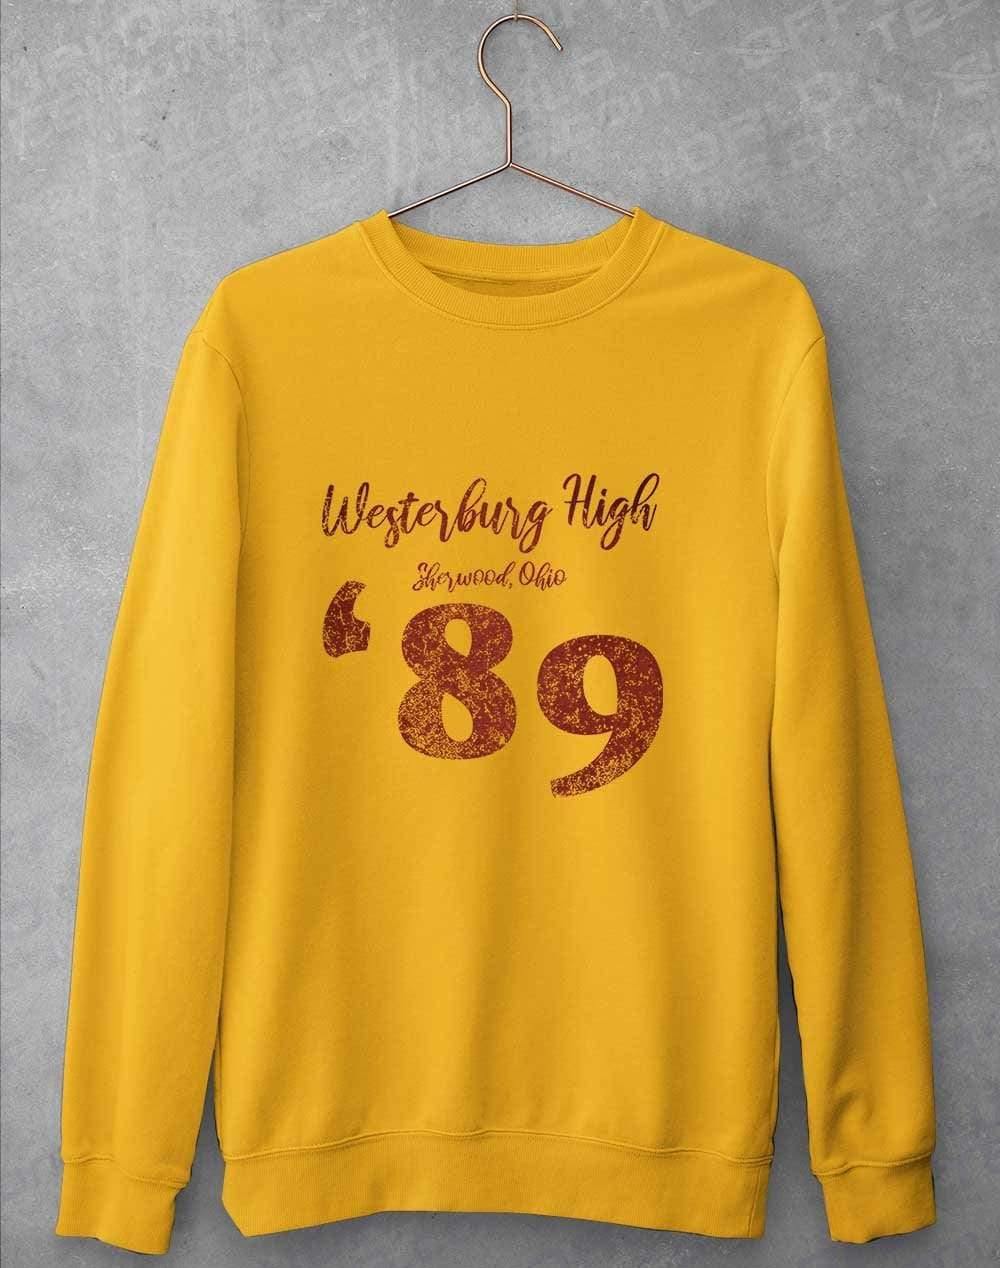 Westerburg High School Sweatshirt S / Gold  - Off World Tees